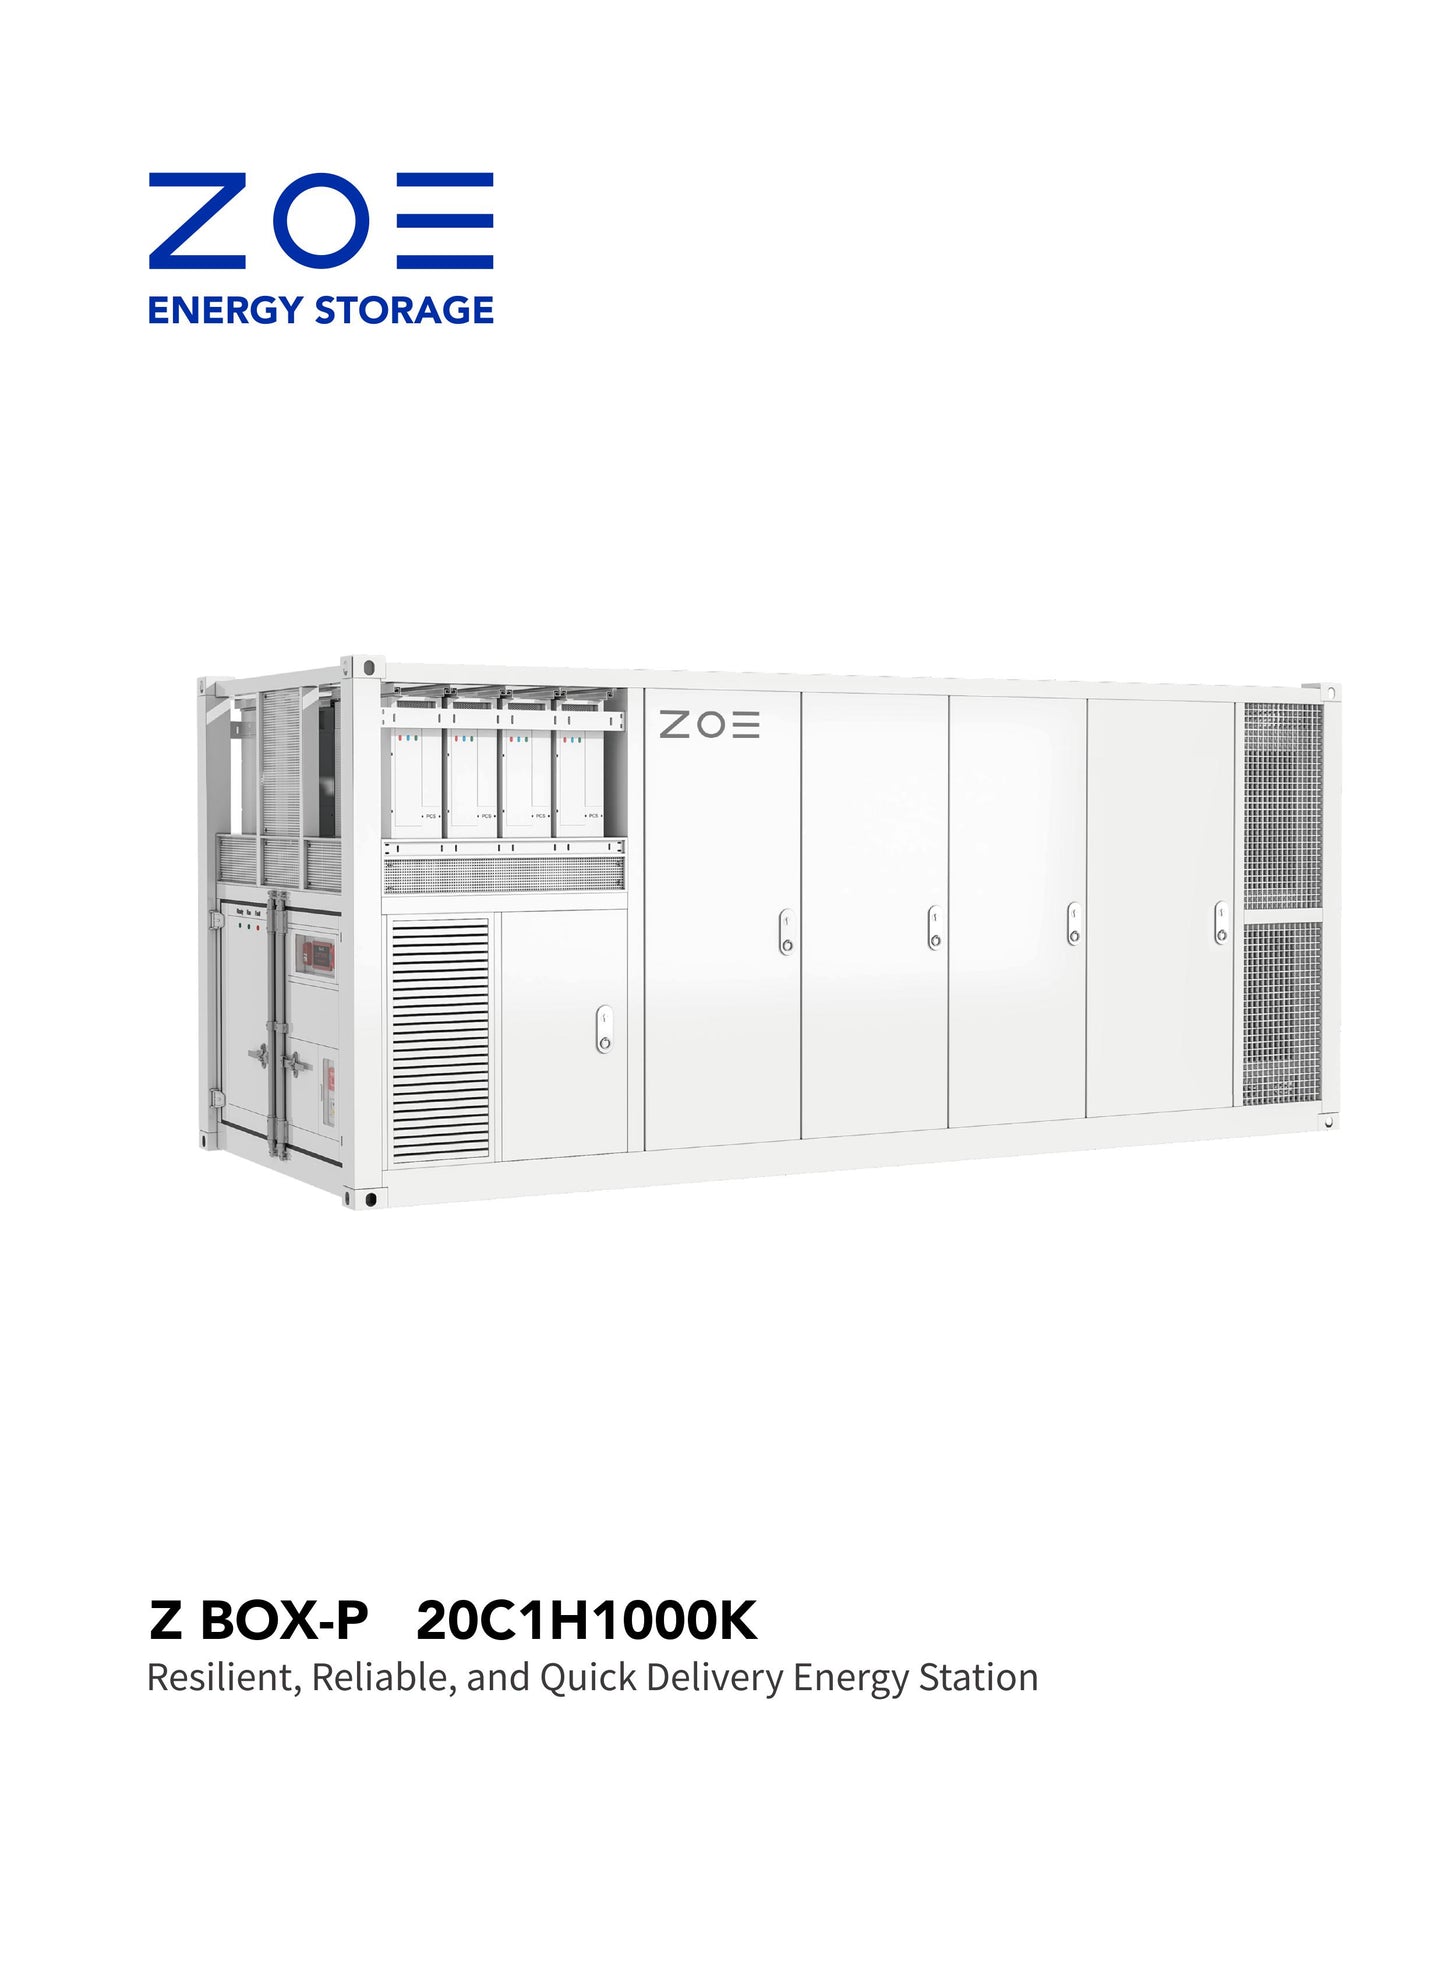 Z BOX-P 1.1MWh